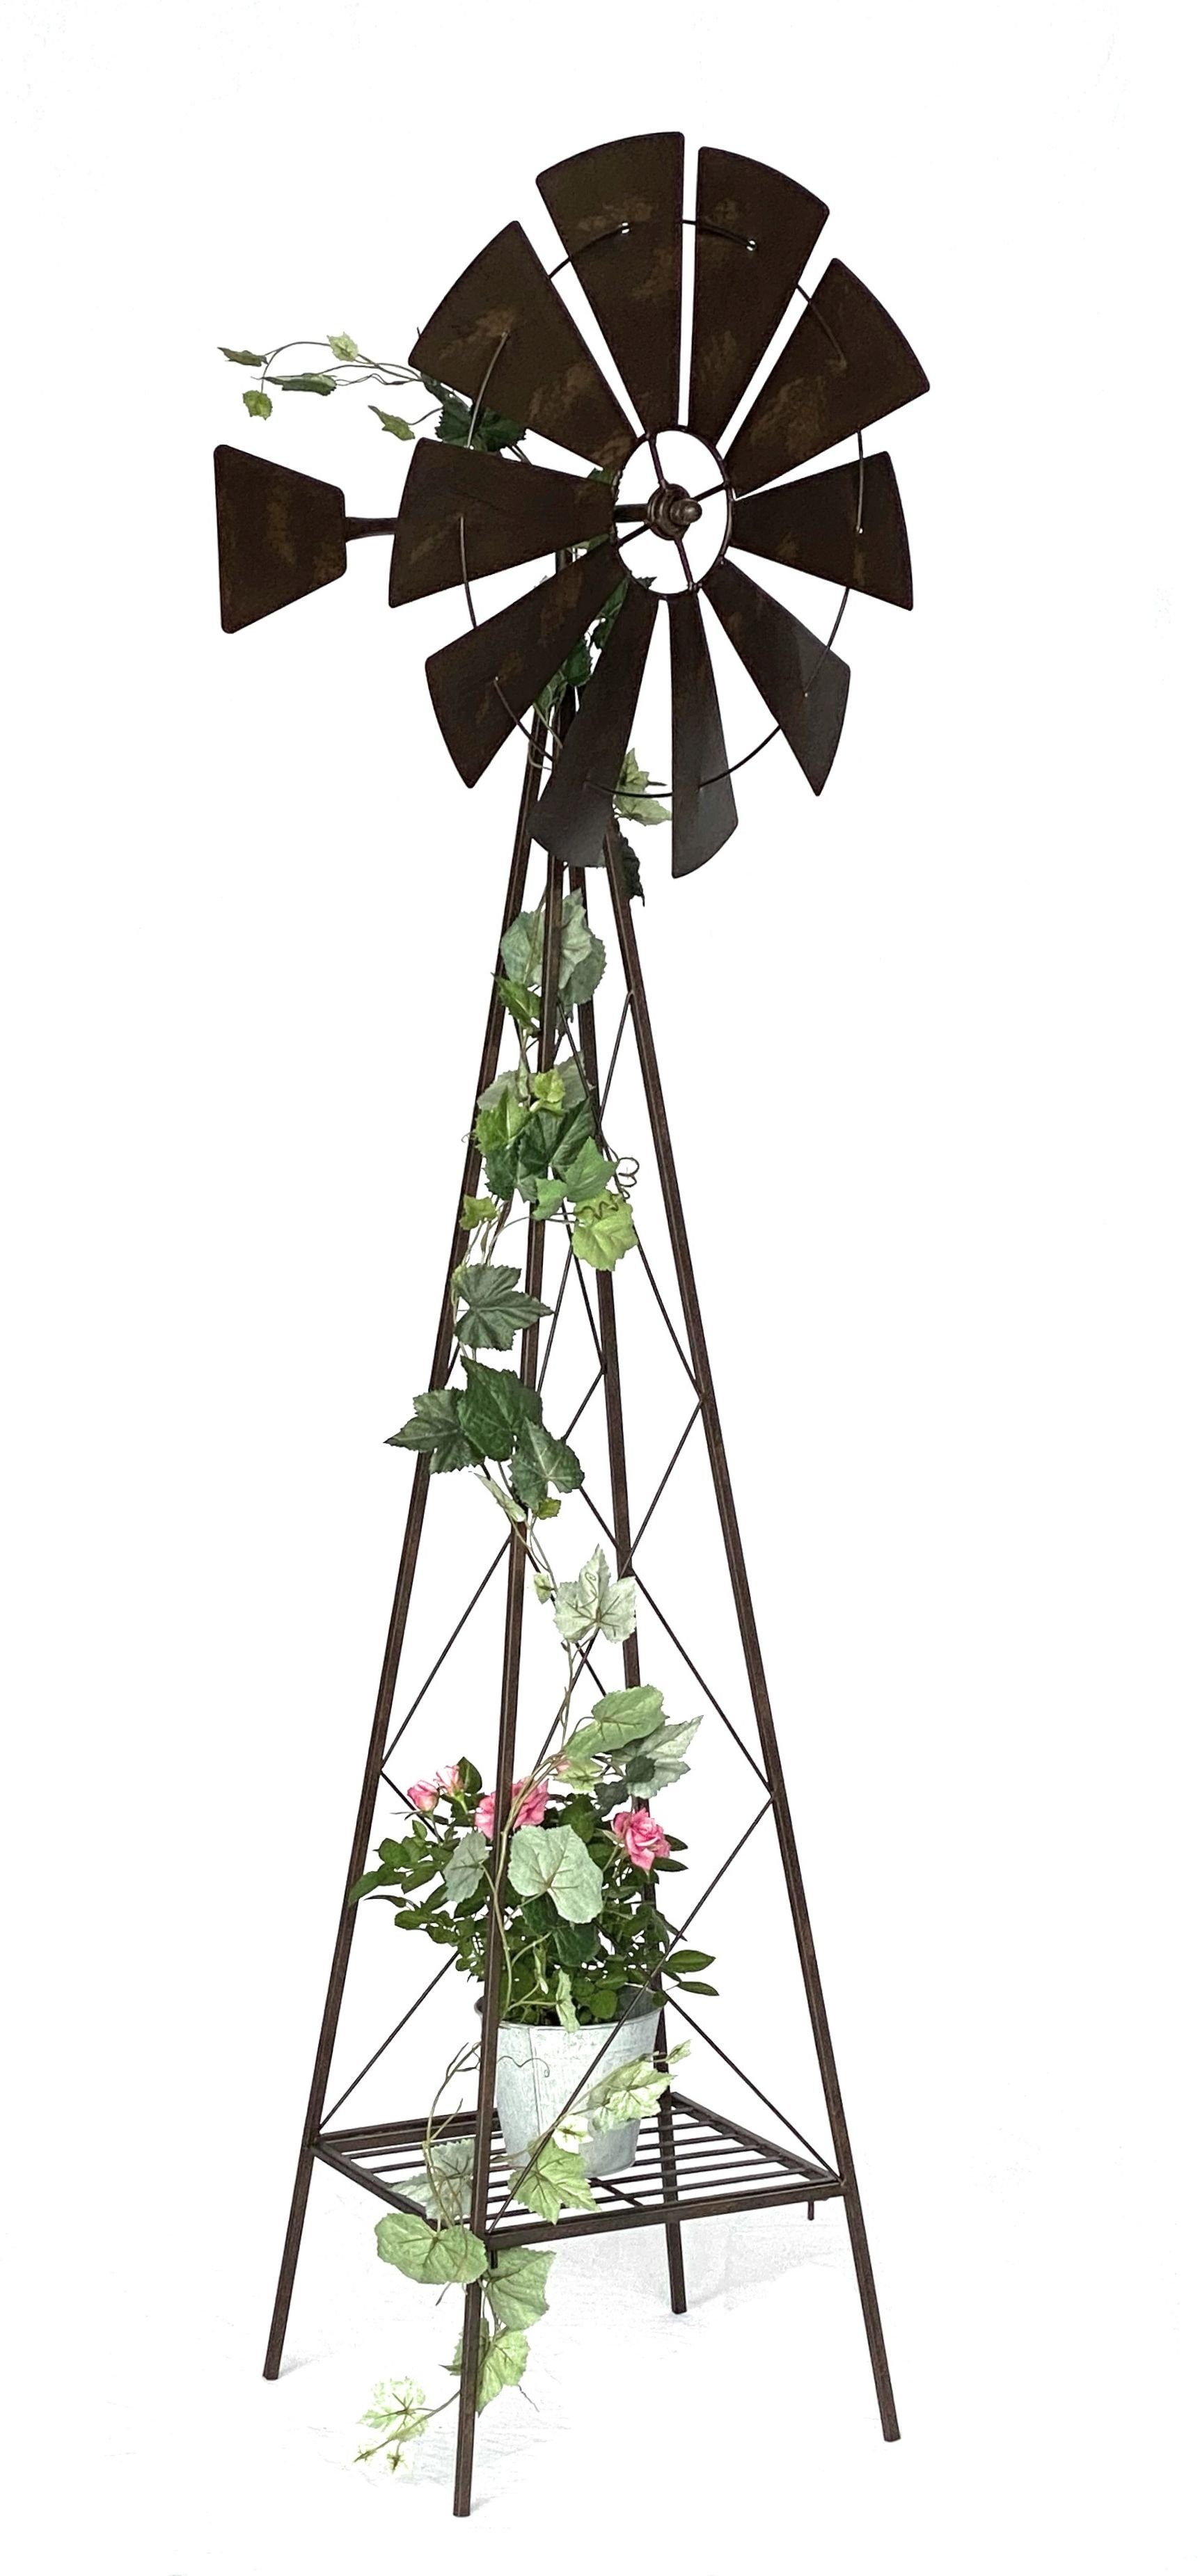 DanDiBo Deko-Windrad Windrad Metall 170 cm kugelgelagert Braun Windspiel  Gartenstecker 96019 Windmühle Wetterfest Gartendeko Garten Bodenstecker